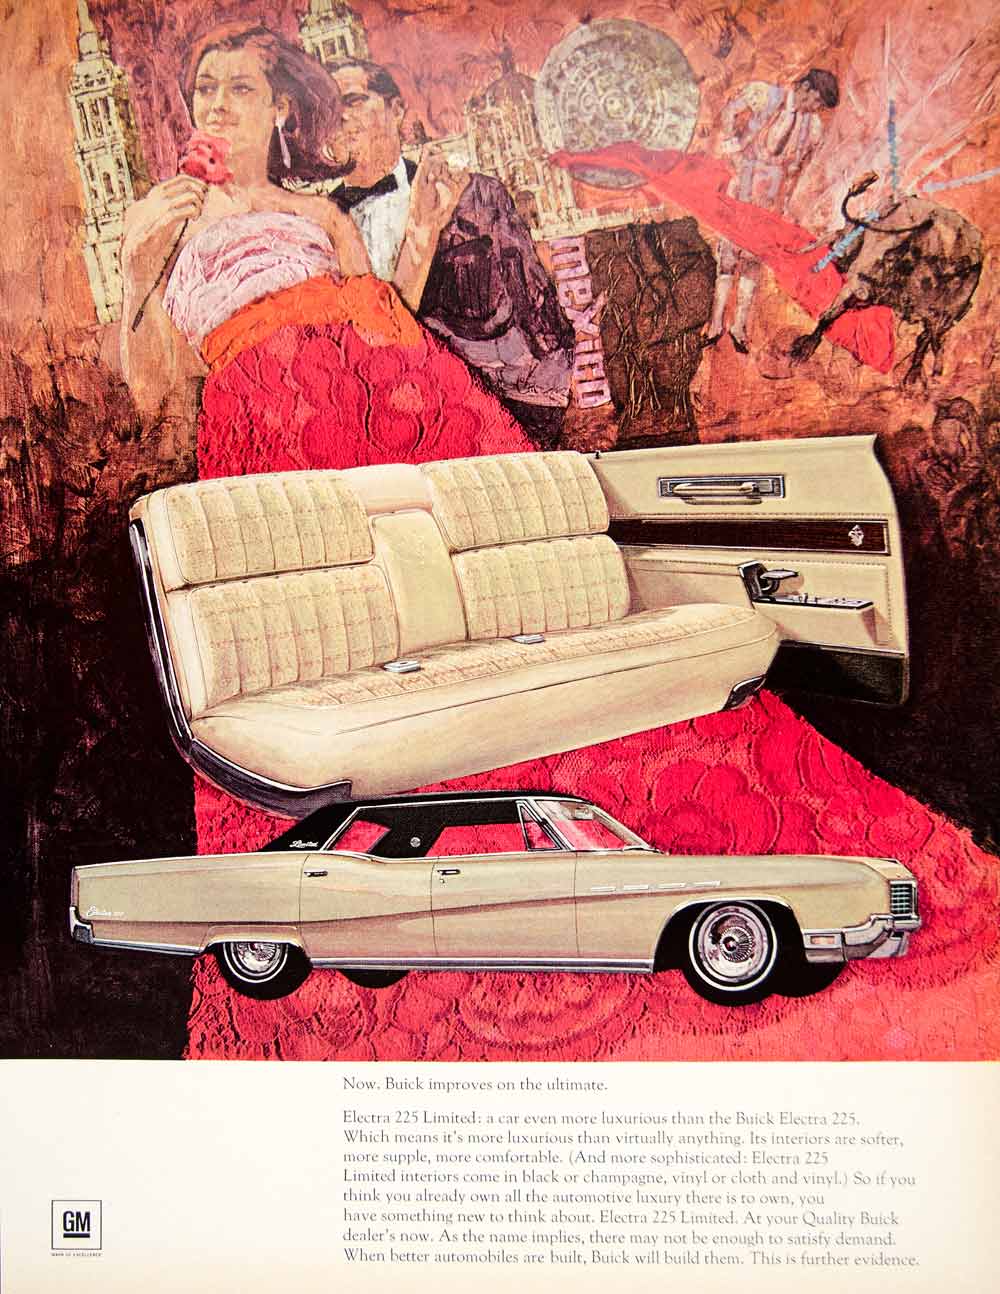 1966 Ad 1967 Buick Electra 225 Limited Automobile Luxury Car Interior GM YFM3